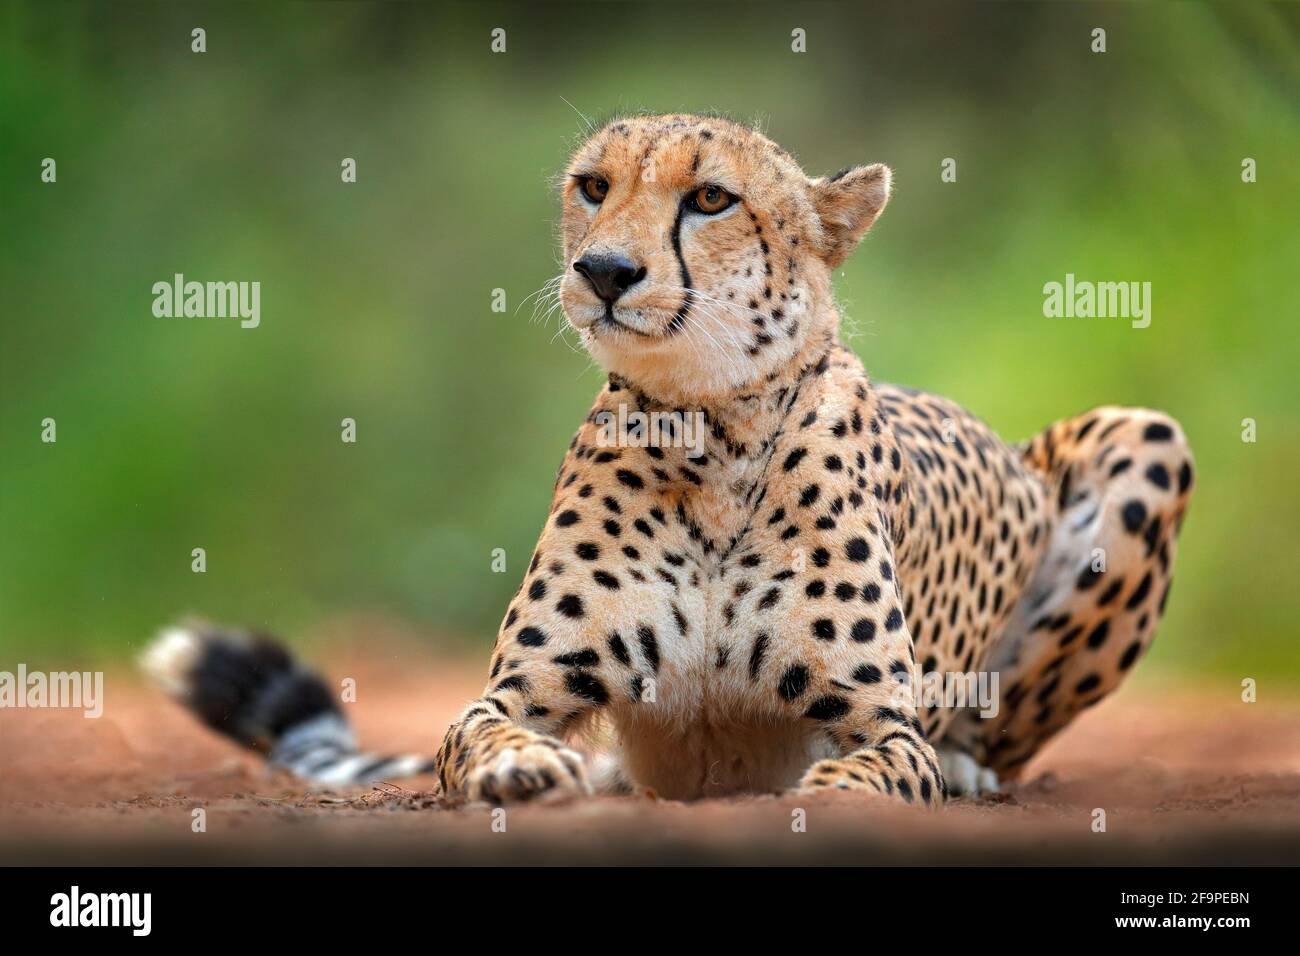 Gepard, Acinonyx jubatus, Detailportrait der Wildkatze. Schnellstes Säugetier an Land, Okavango, Botswana in Afrika. Wildlife-Szene aus afrikanischer Natur. Stockfoto